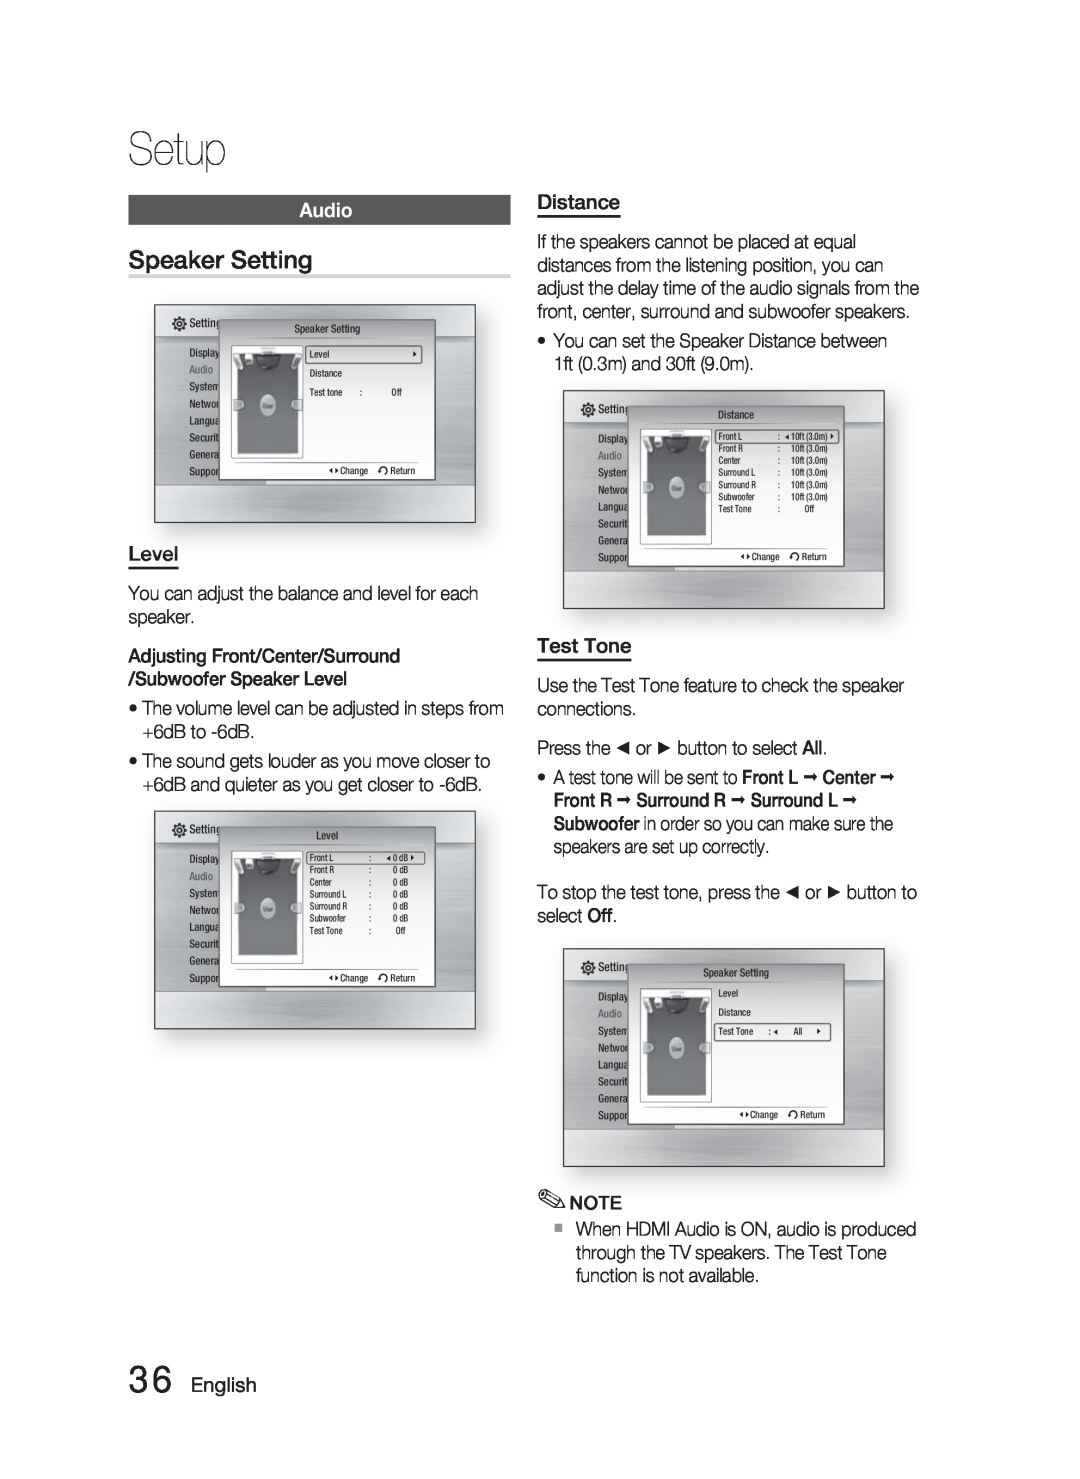 Samsung HT-C6900W user manual Speaker Setting, Audio, Level, Distance, Test Tone, English, Setup 